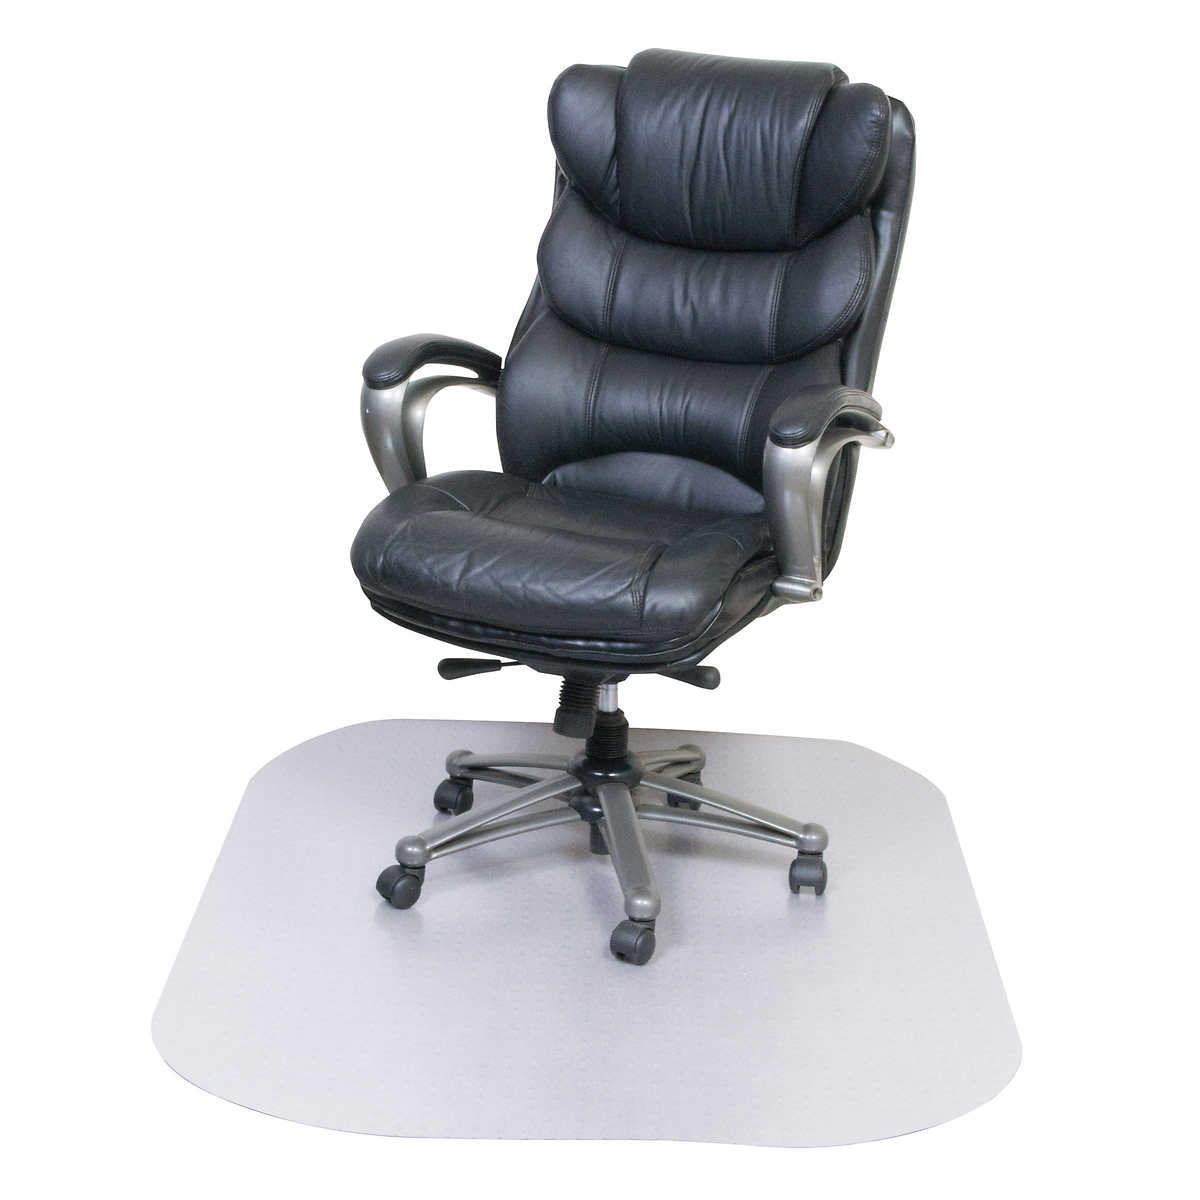 Nonabrasive Round Chair Mats Purple Fuzzy Durable Chair Carpet 31*31" 